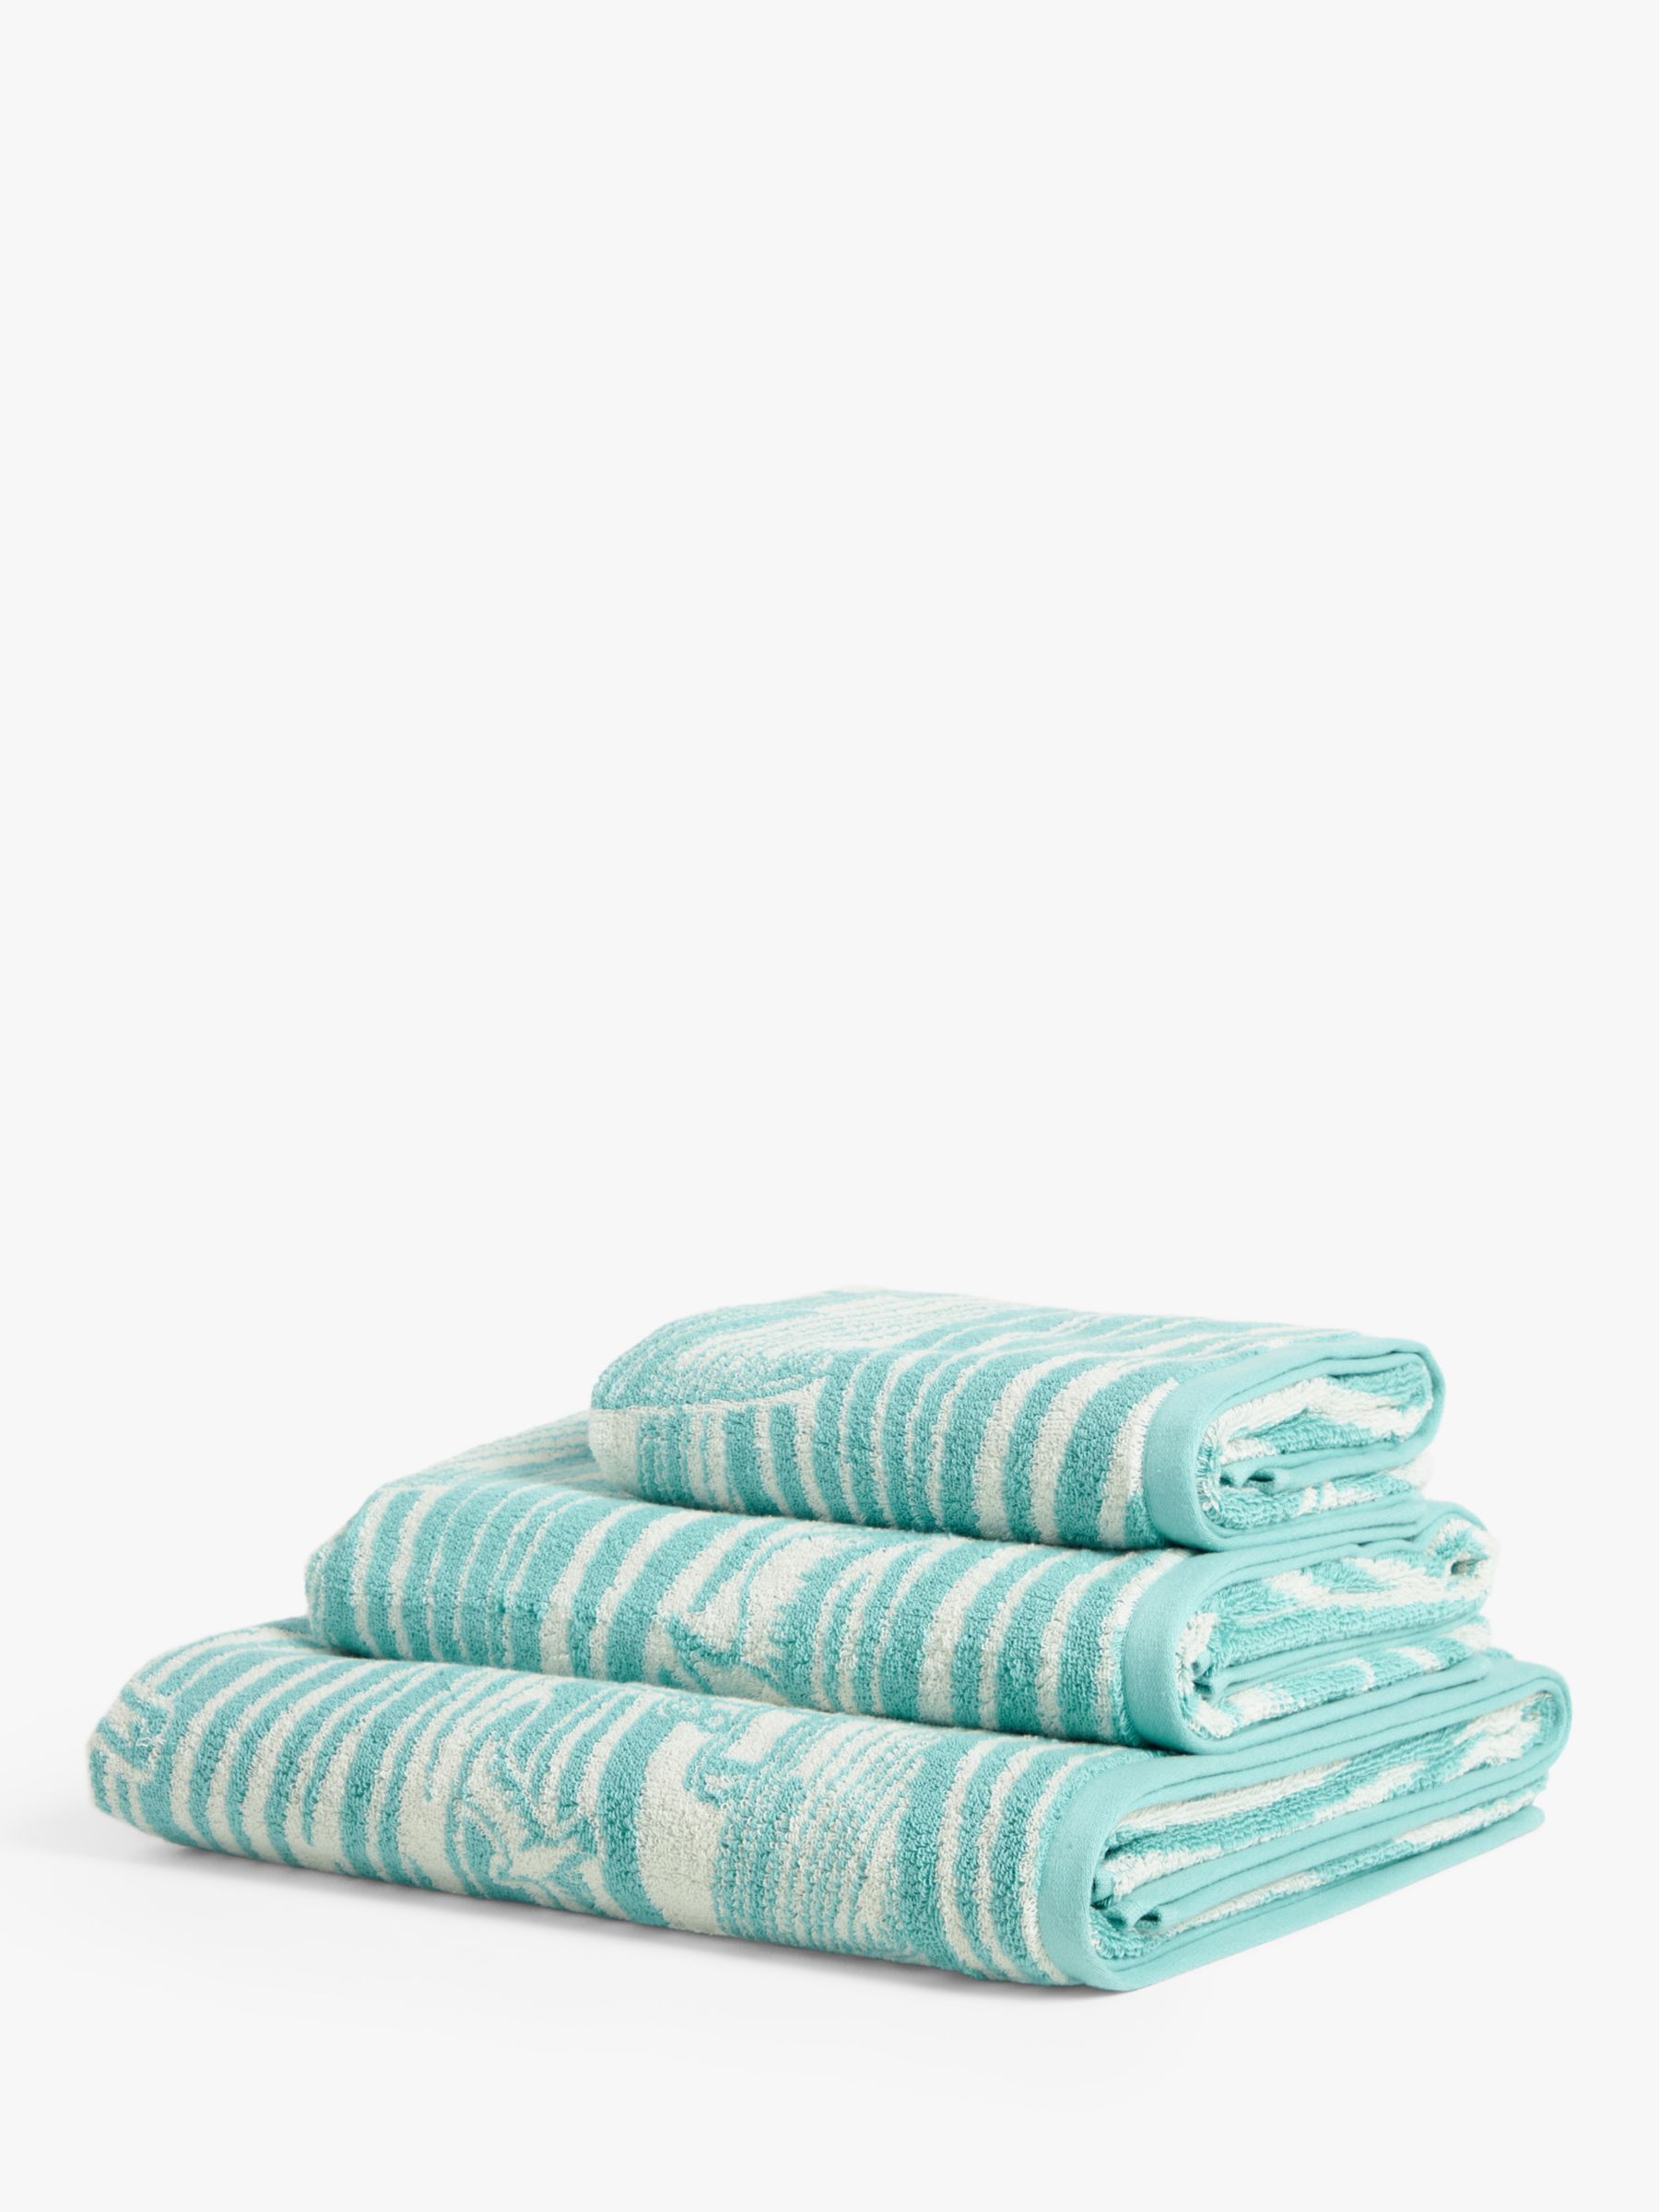 Mini Moderns Whitby Towels